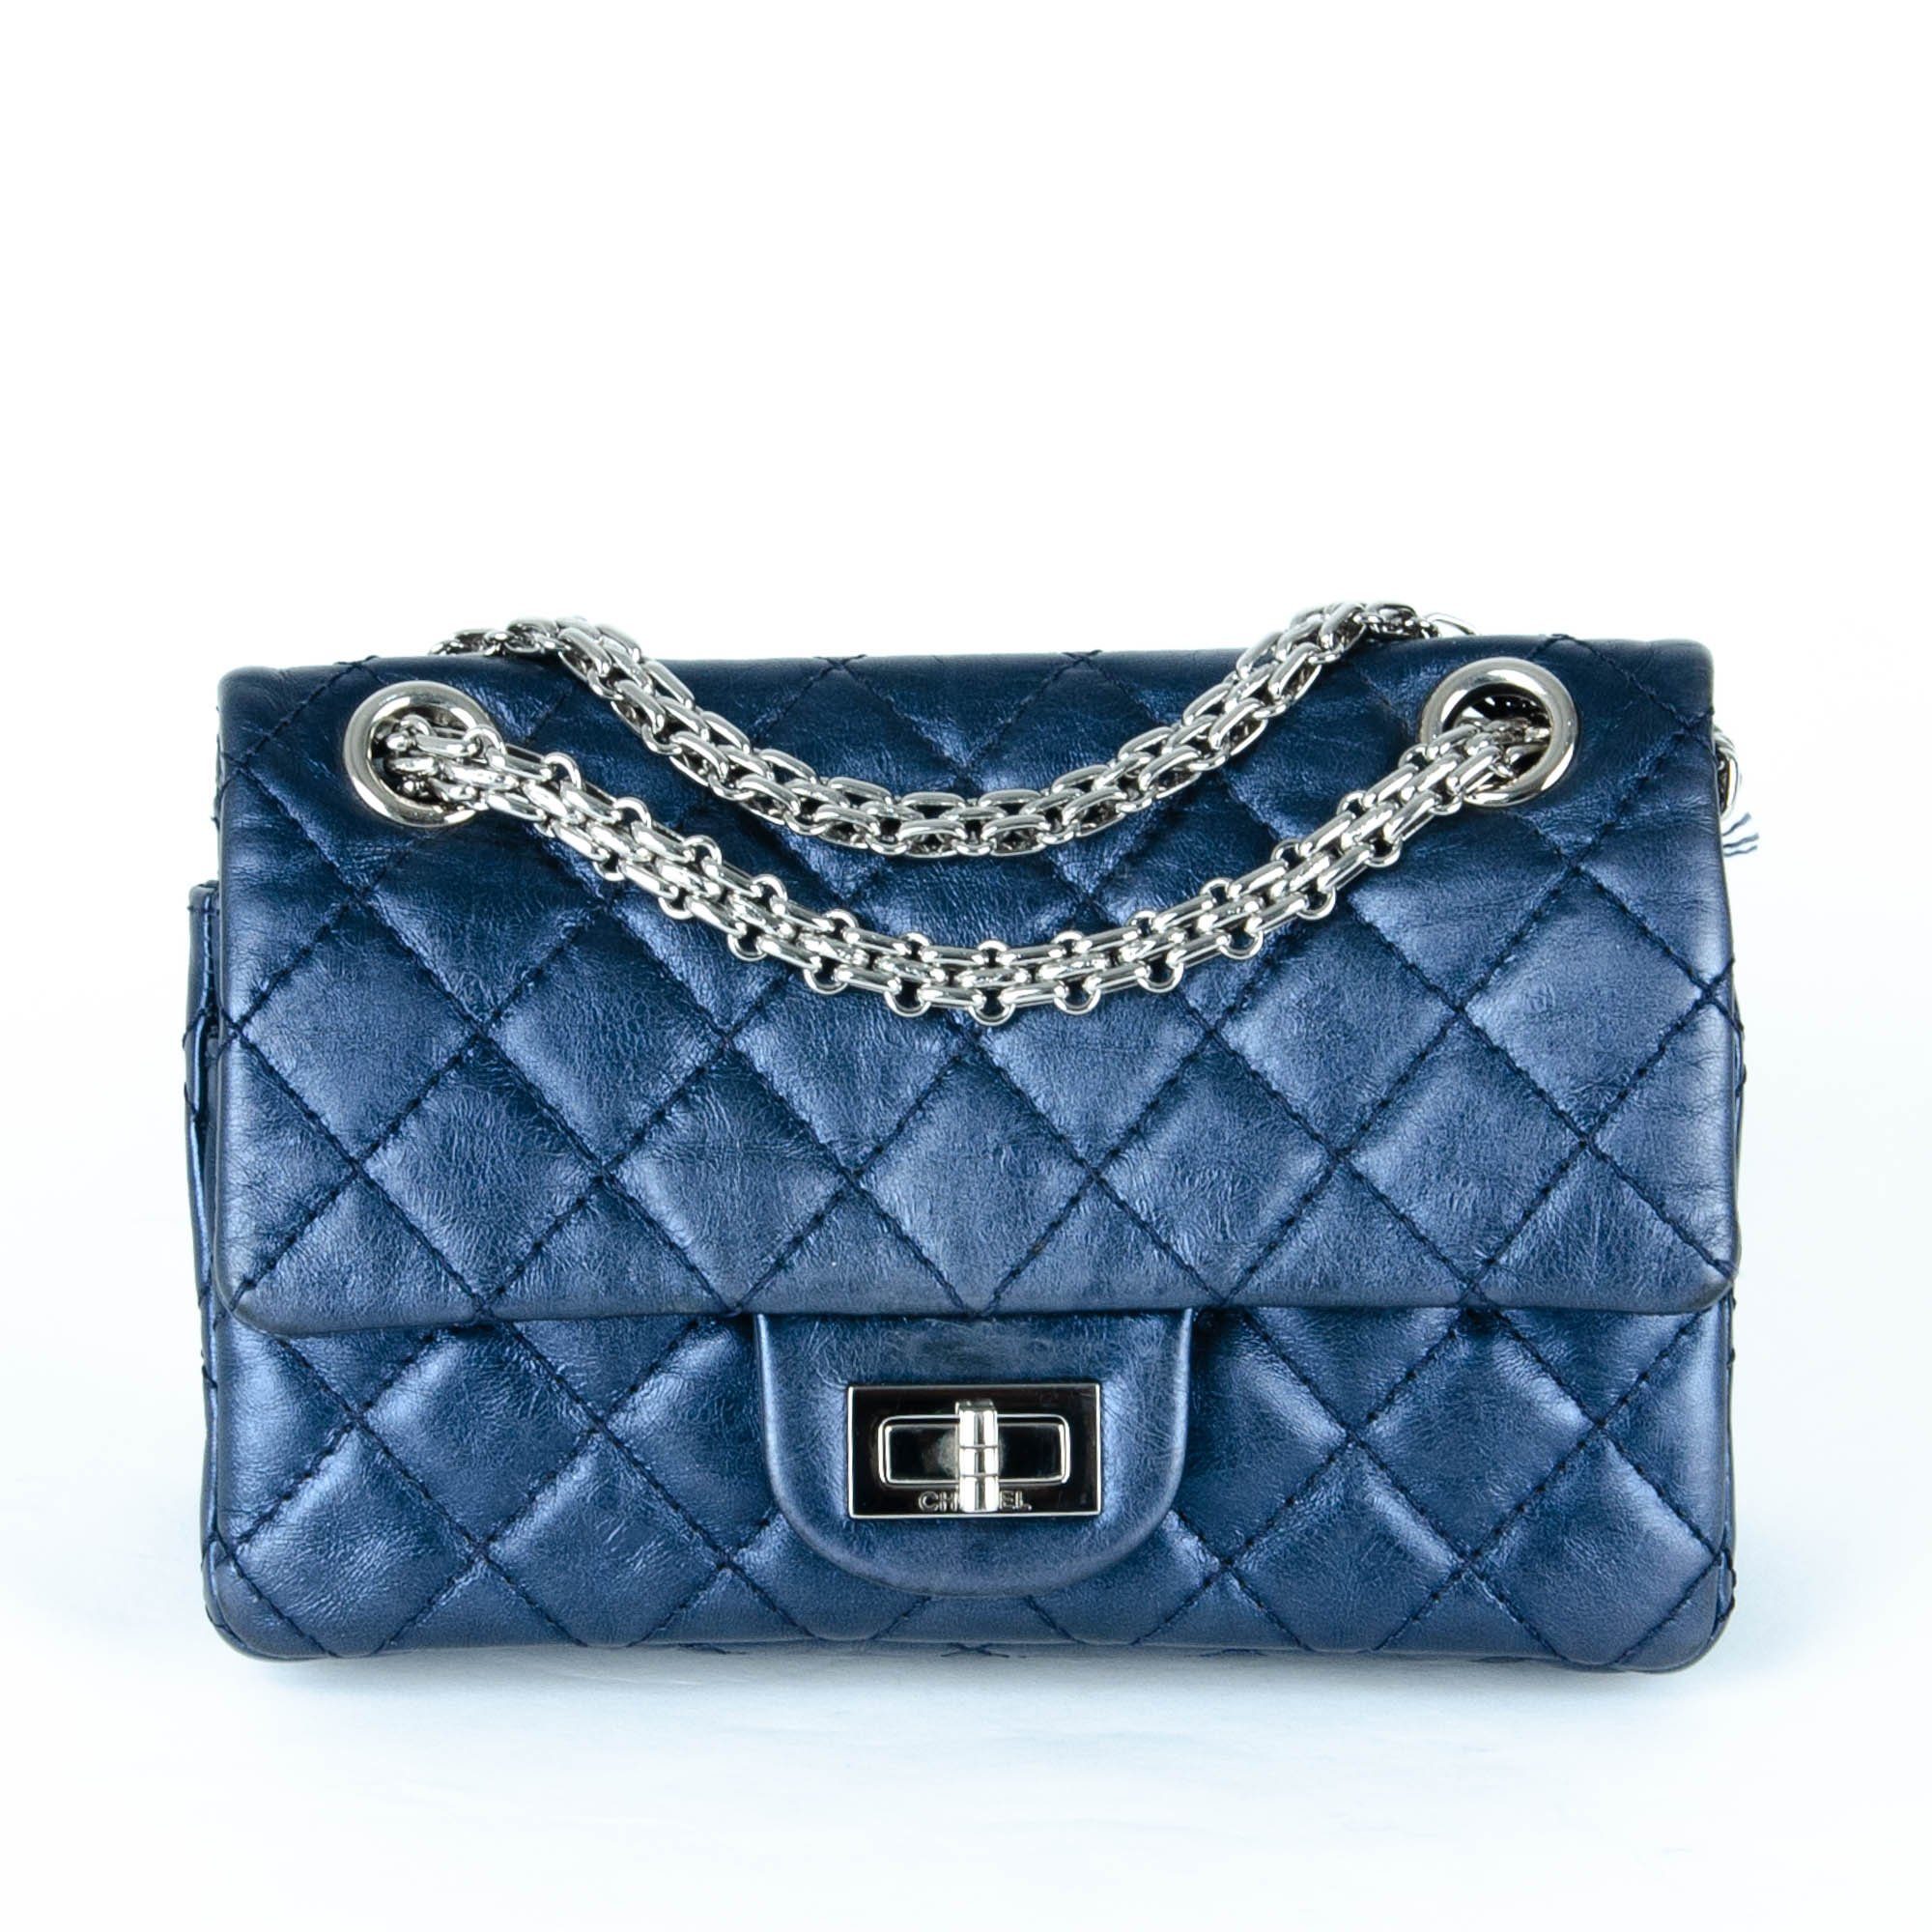 purses and handbags chanel